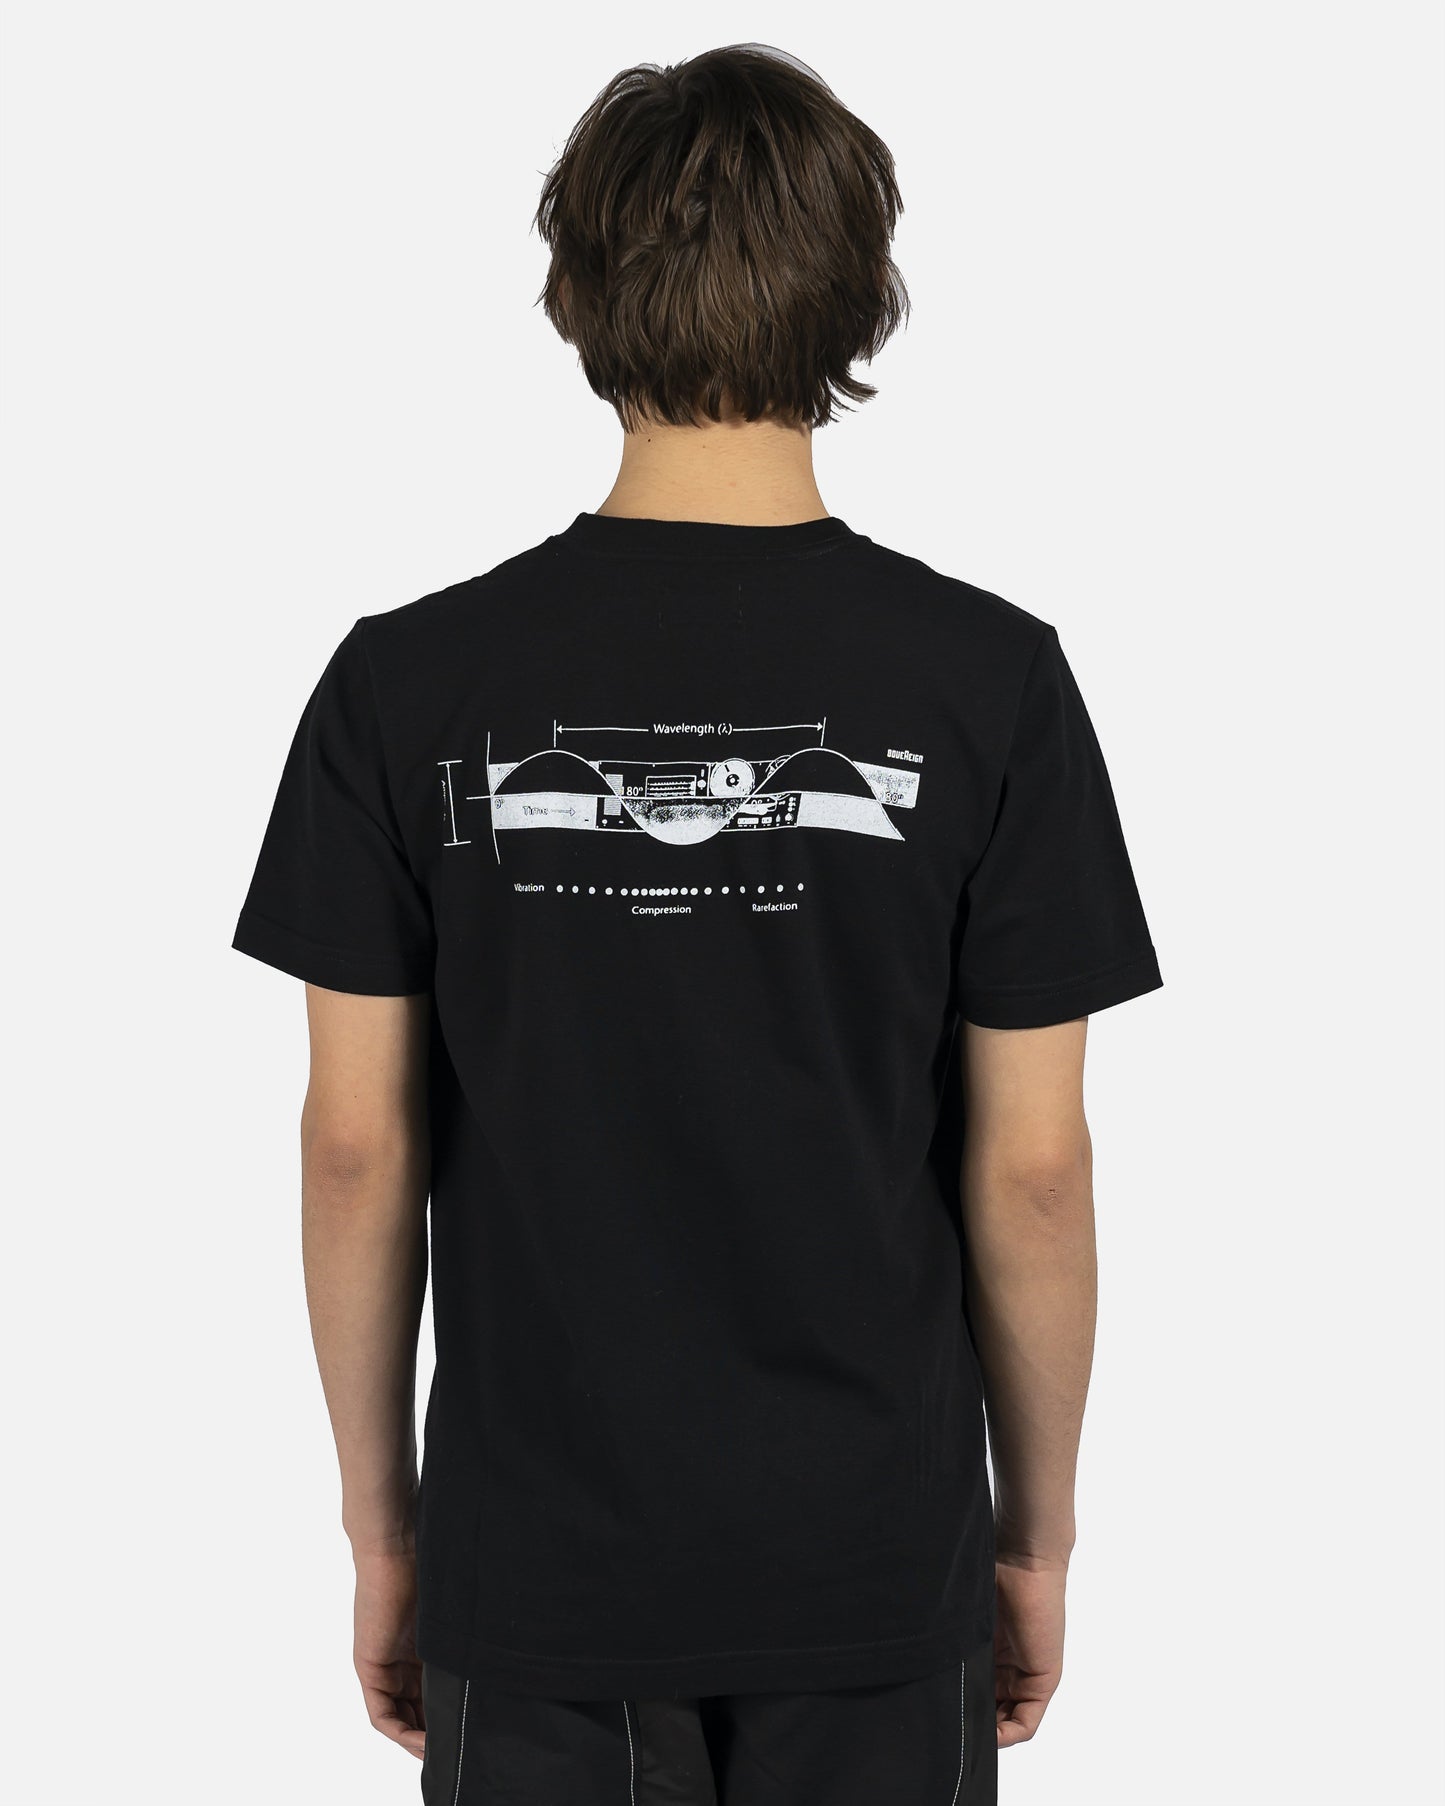 SVRN Men's T-Shirts Dieter T-Shirt in Black